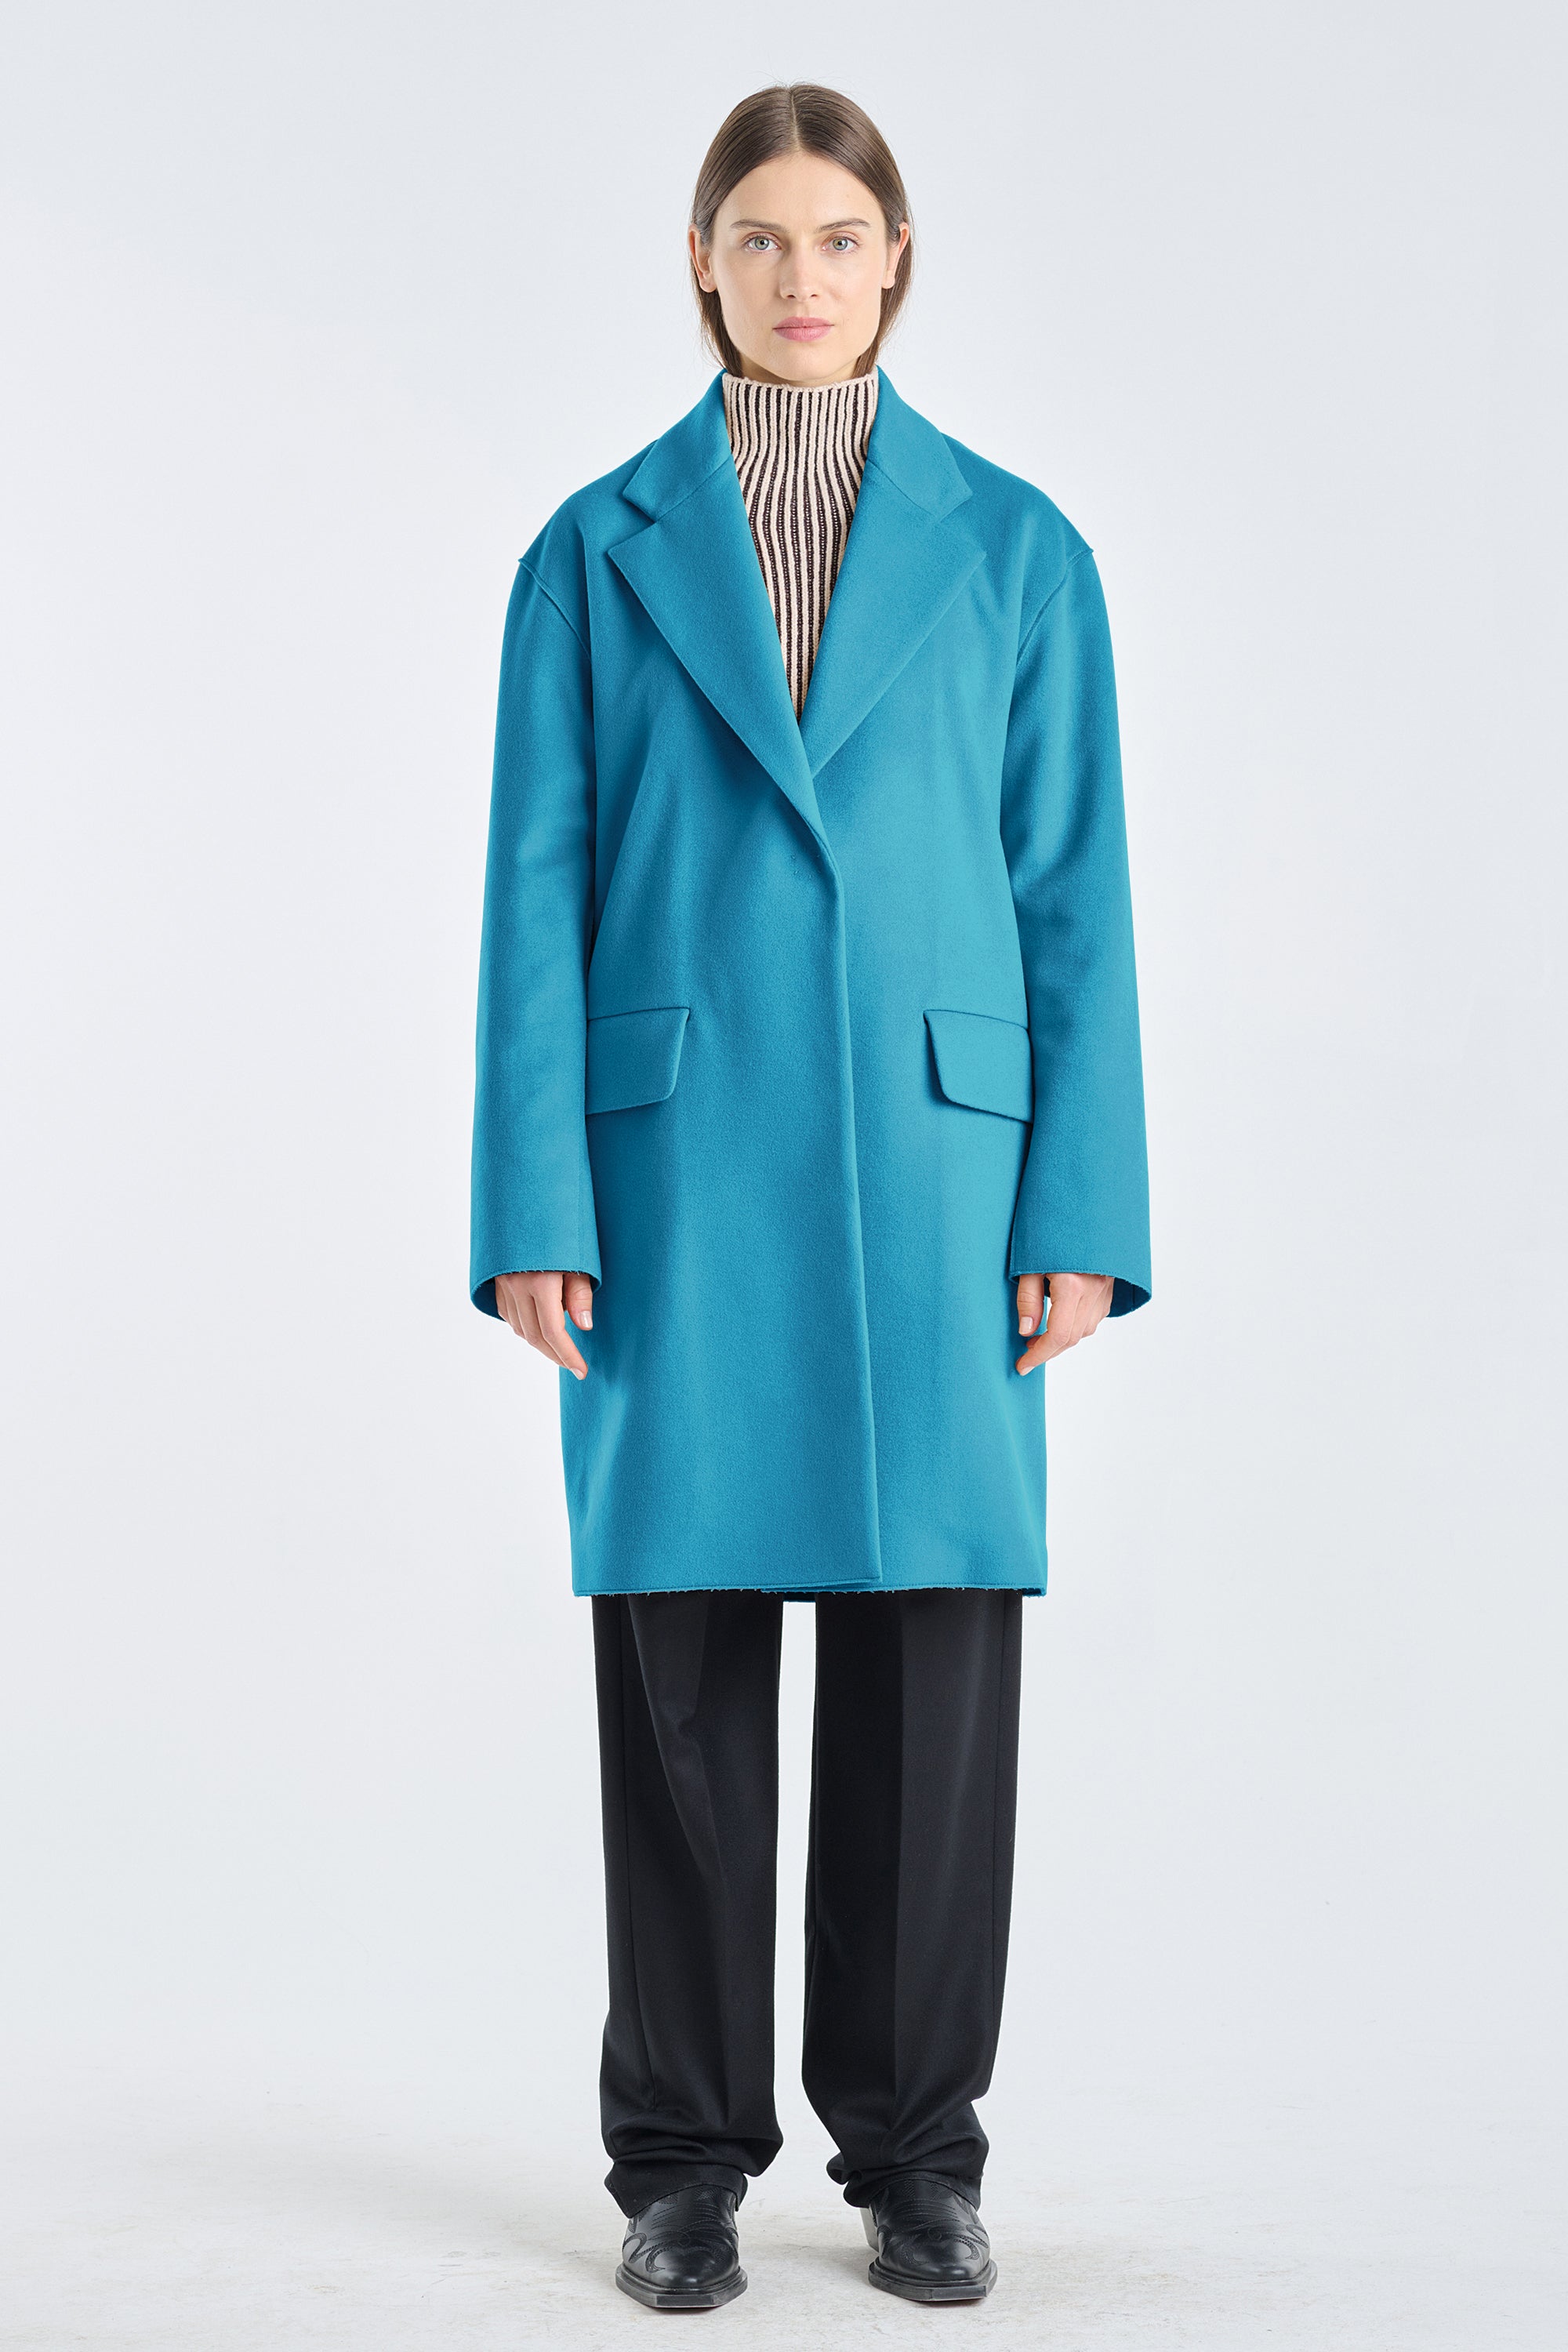 Teal wool cashmere light coat – NEHERA